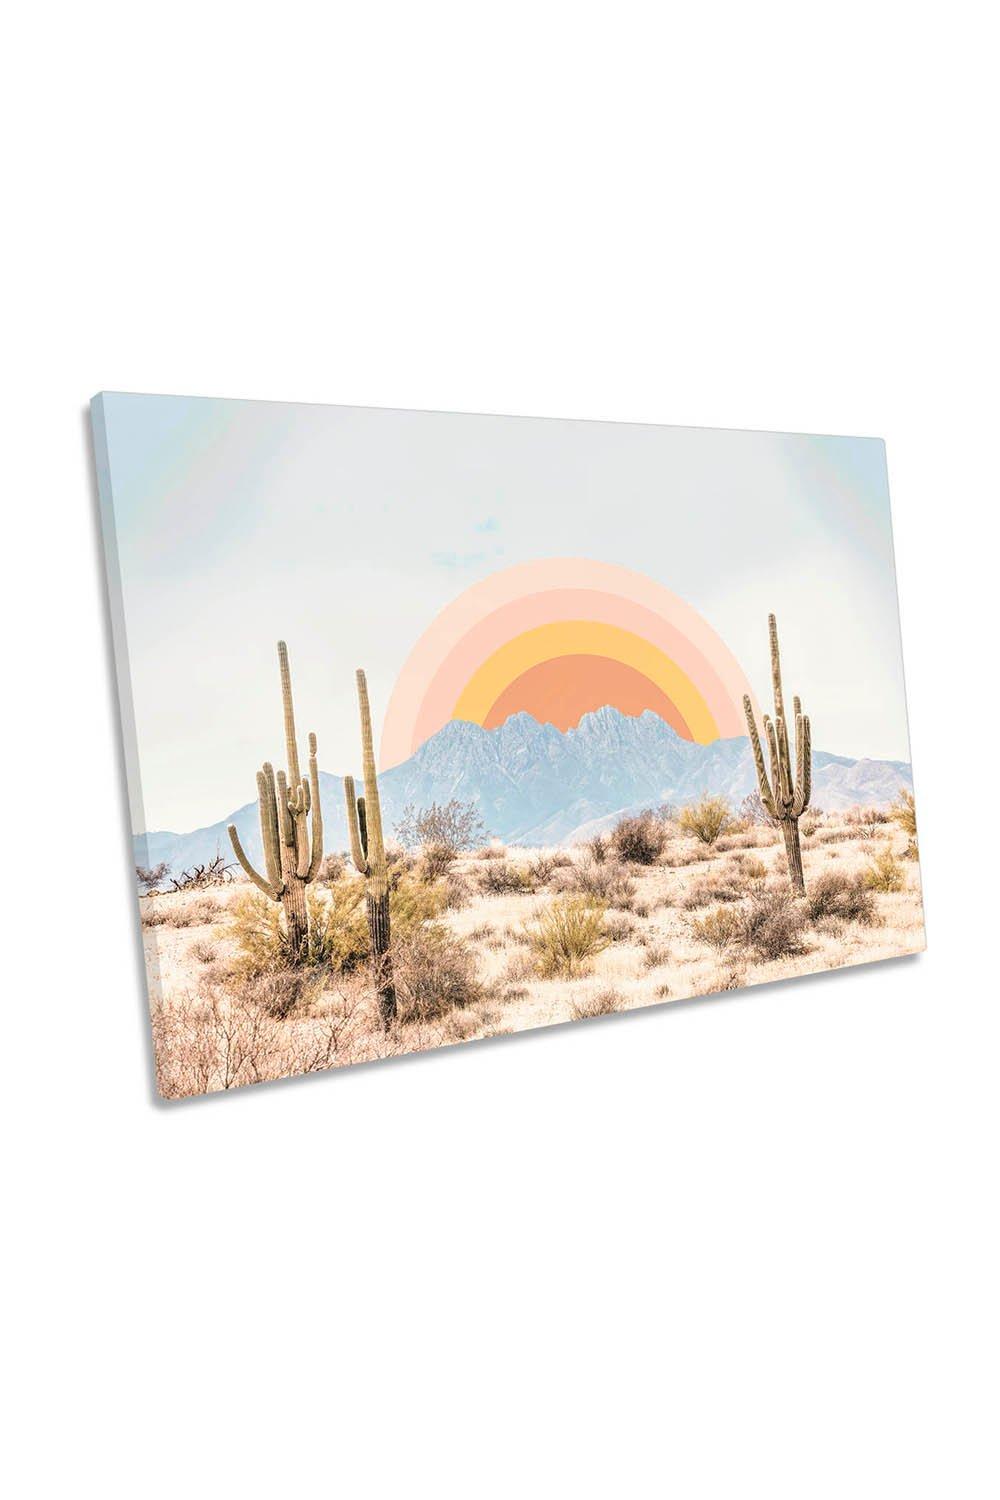 Arizona Sunrise Desert Modern Landscape Canvas Wall Art Picture Print